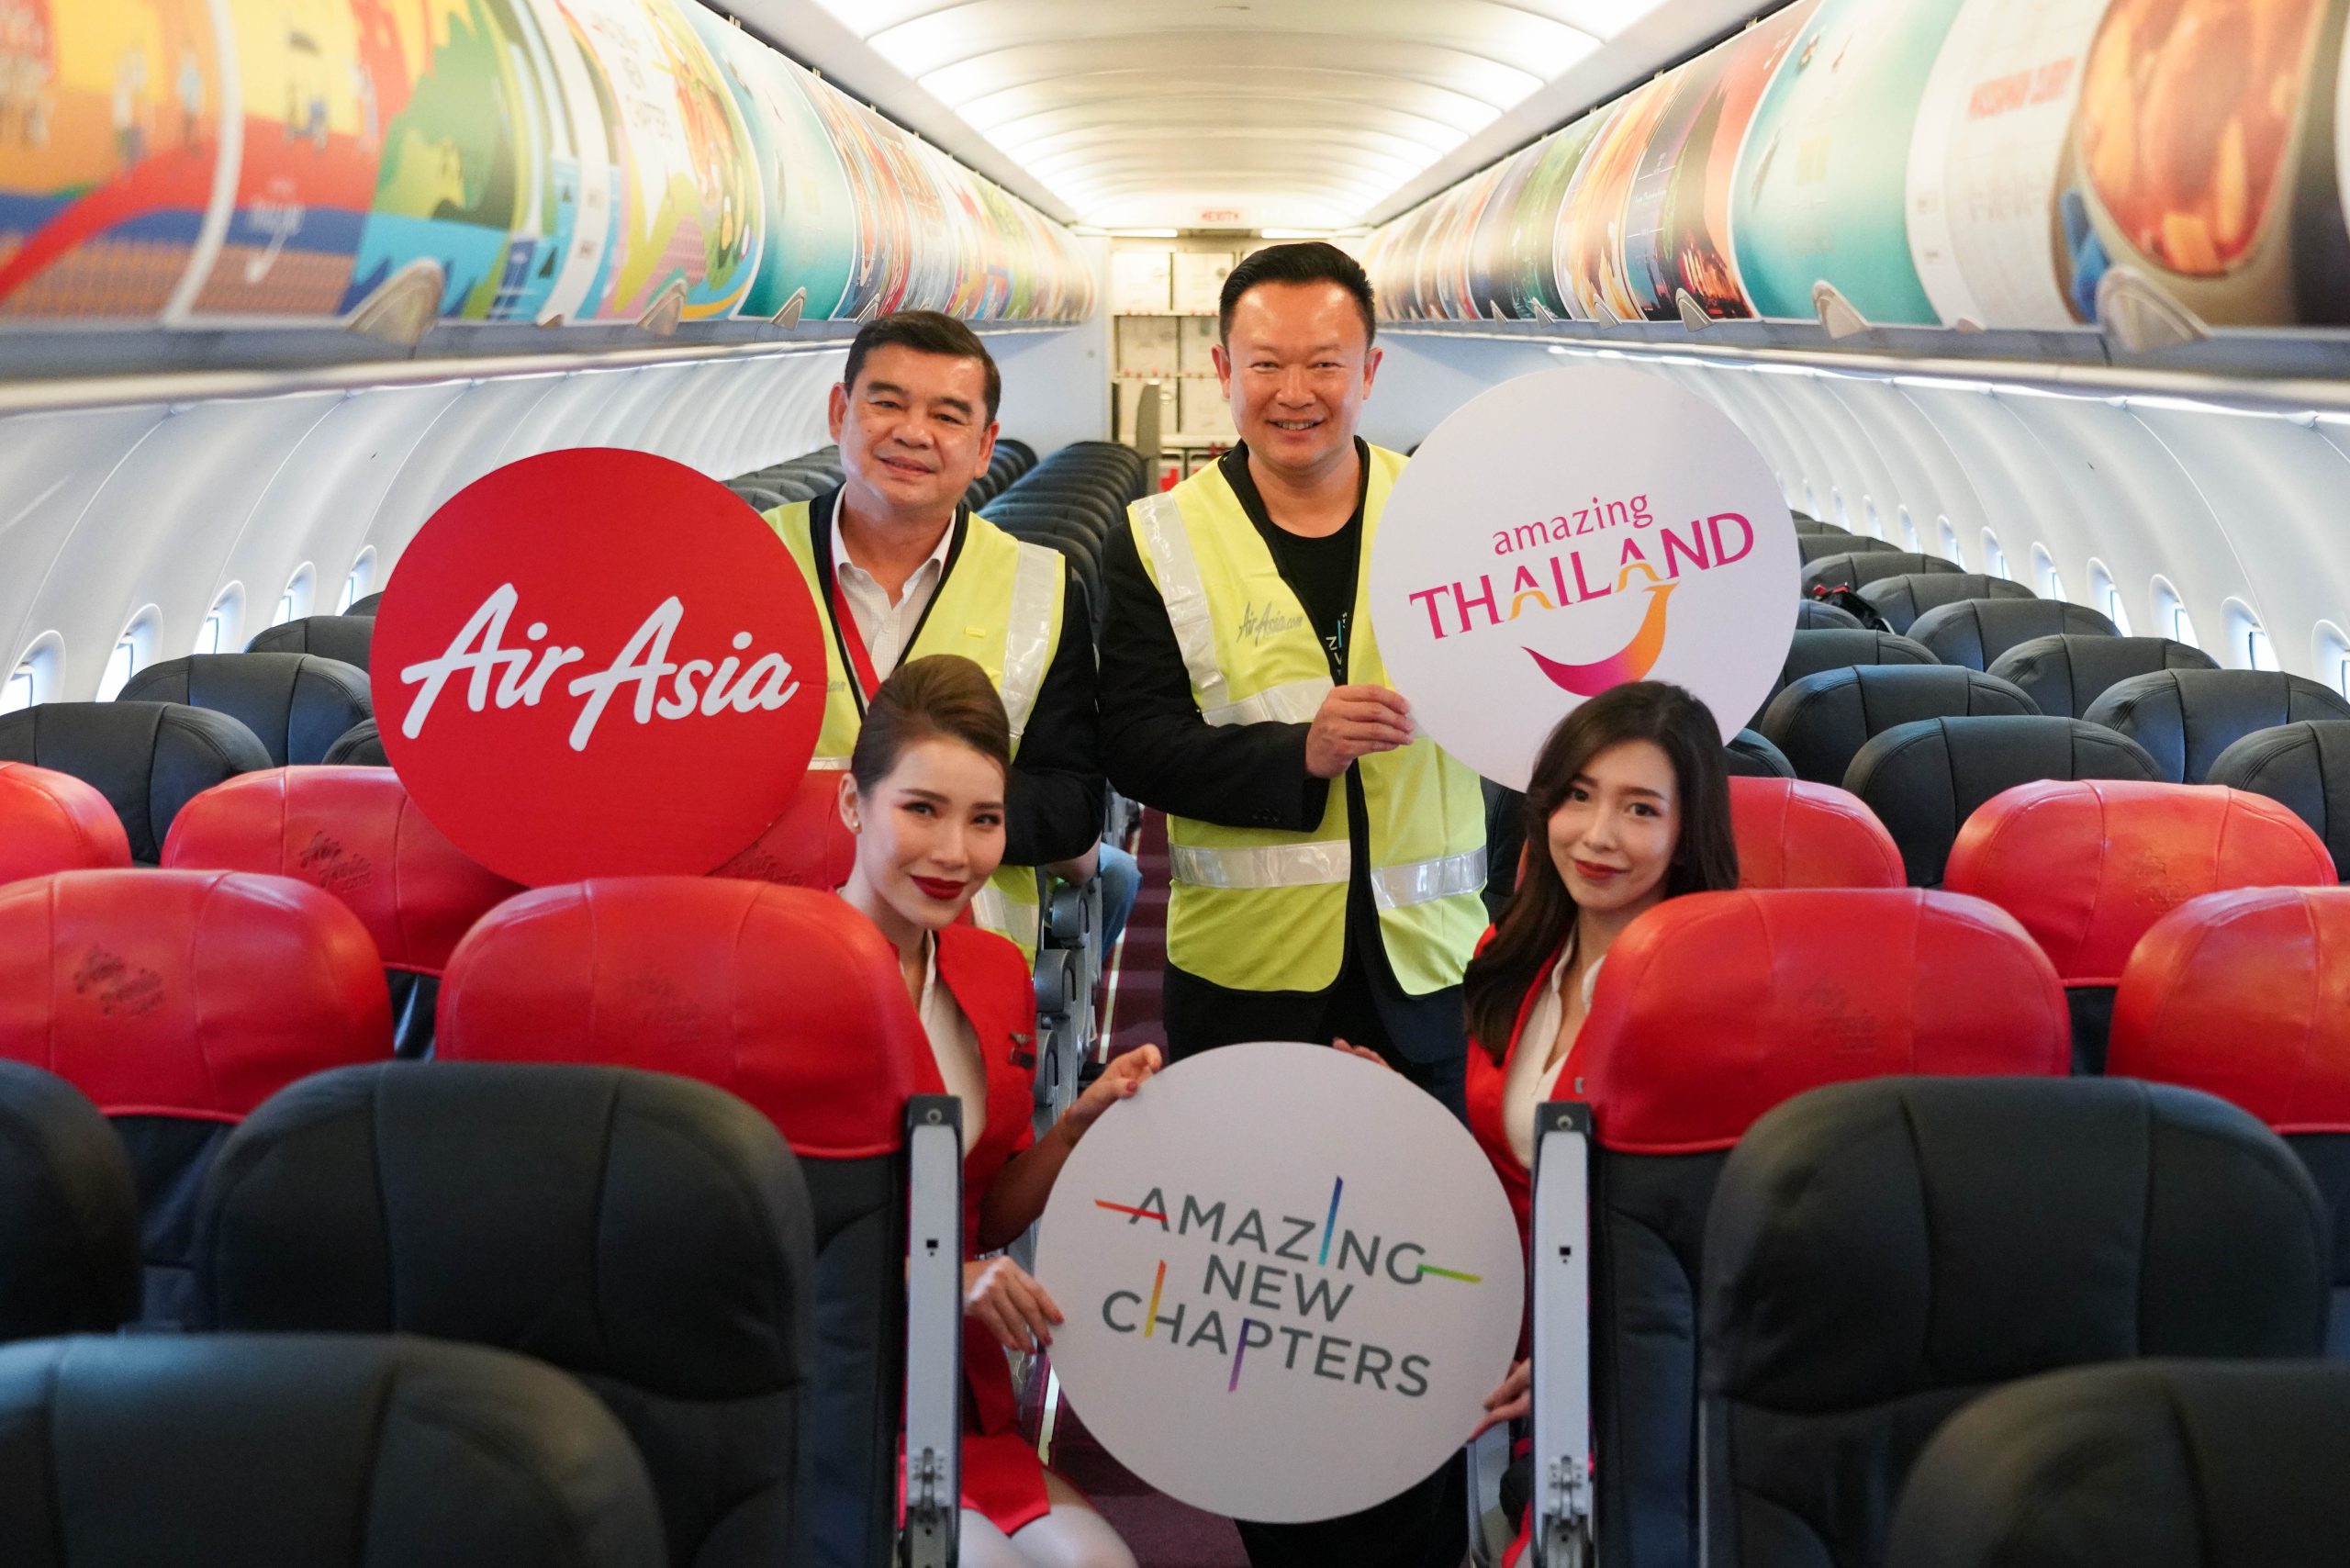 AirAsia paints Thai images on its planes